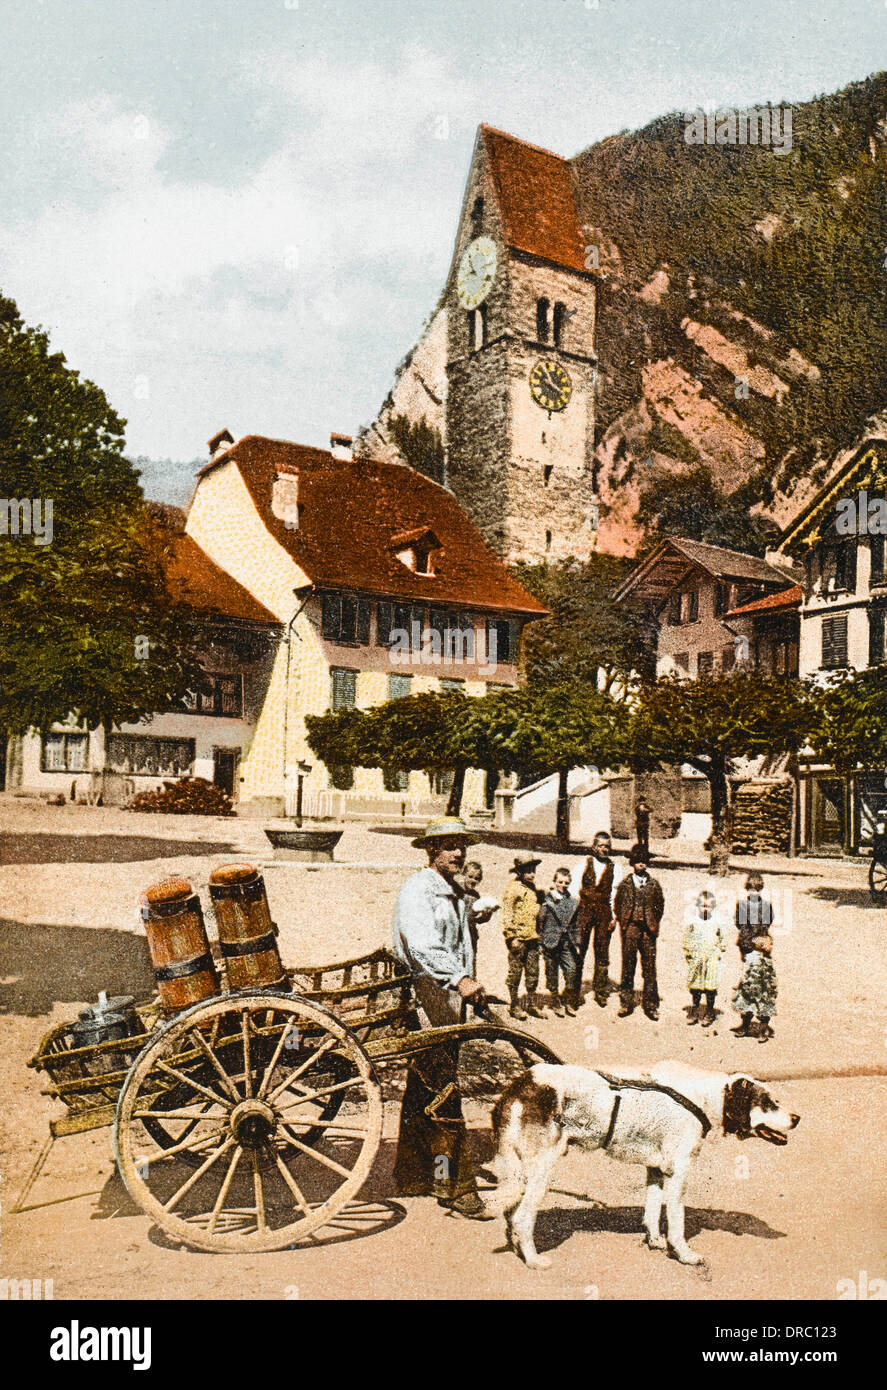 Dog cart - Interlaken, Switzerland Stock Photo